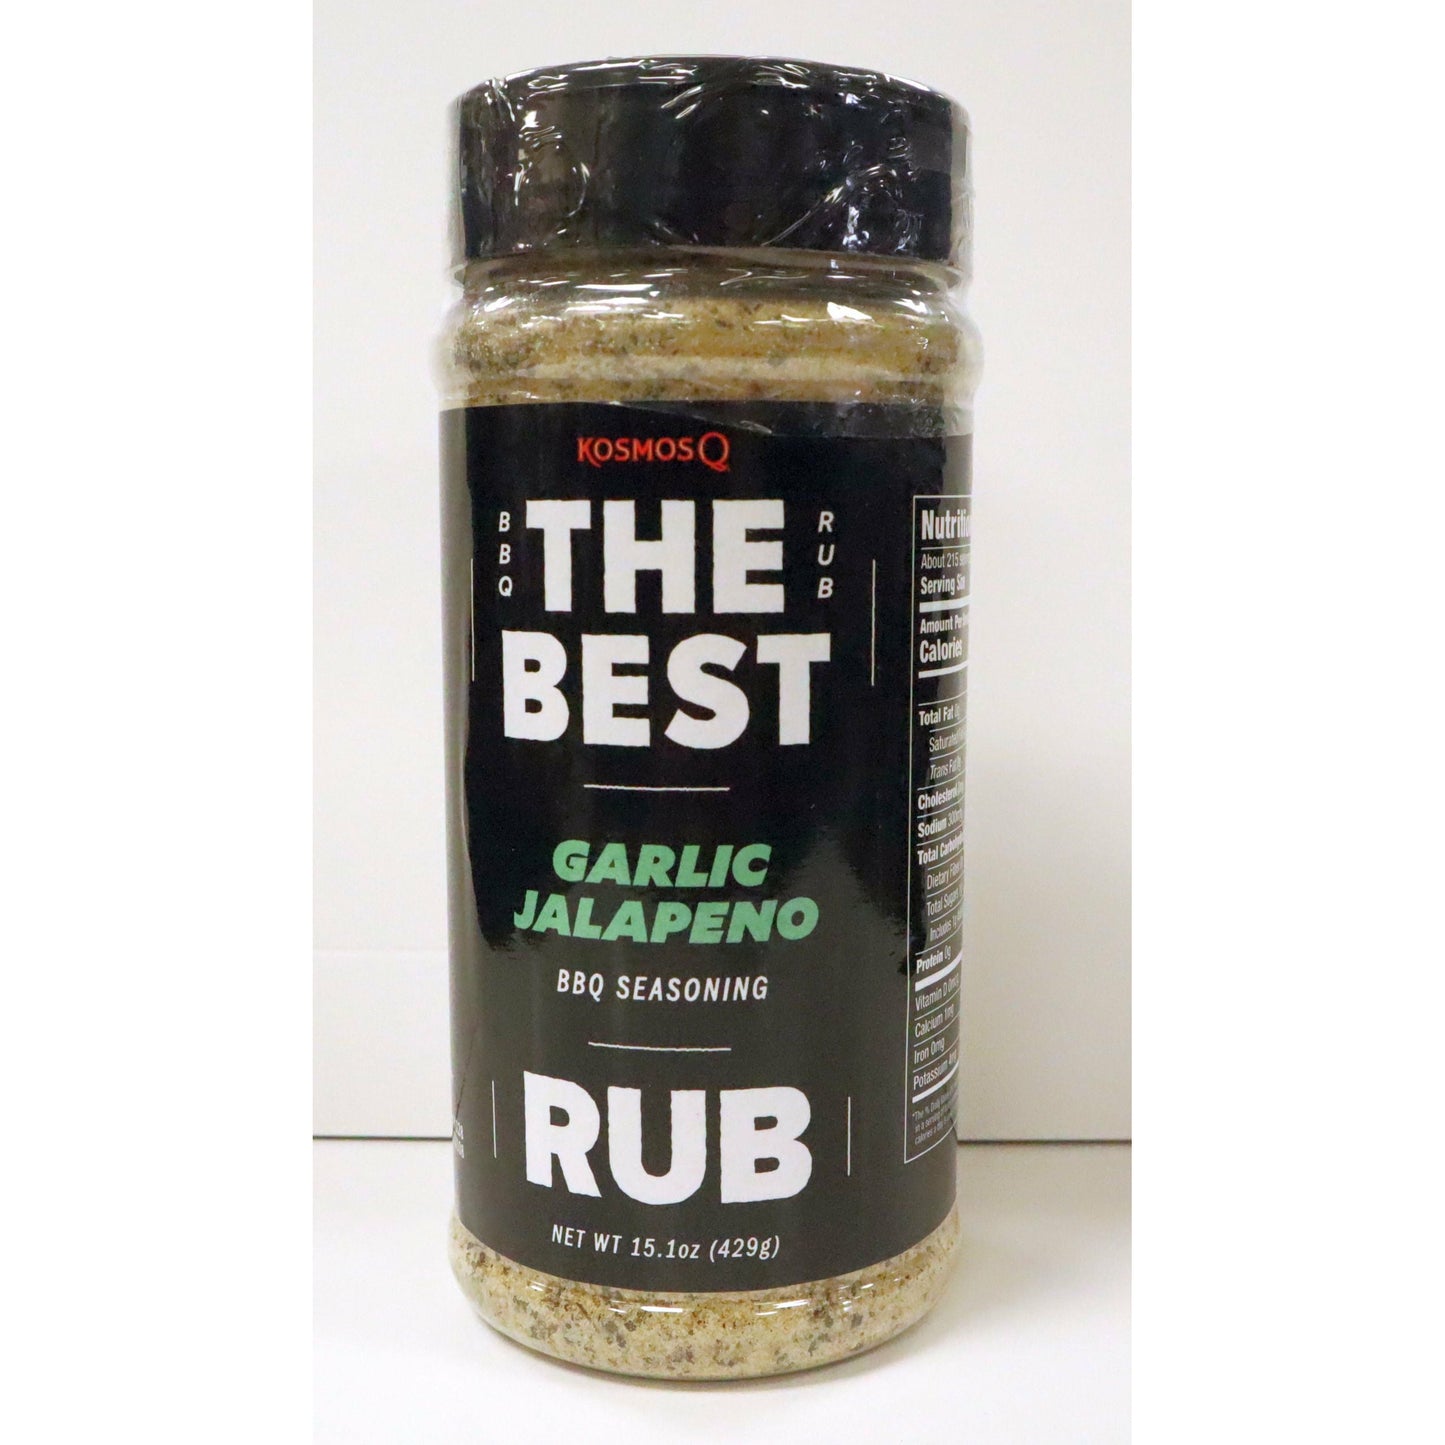 Kosmos Q - The Best Garlic Jalapeno Rub